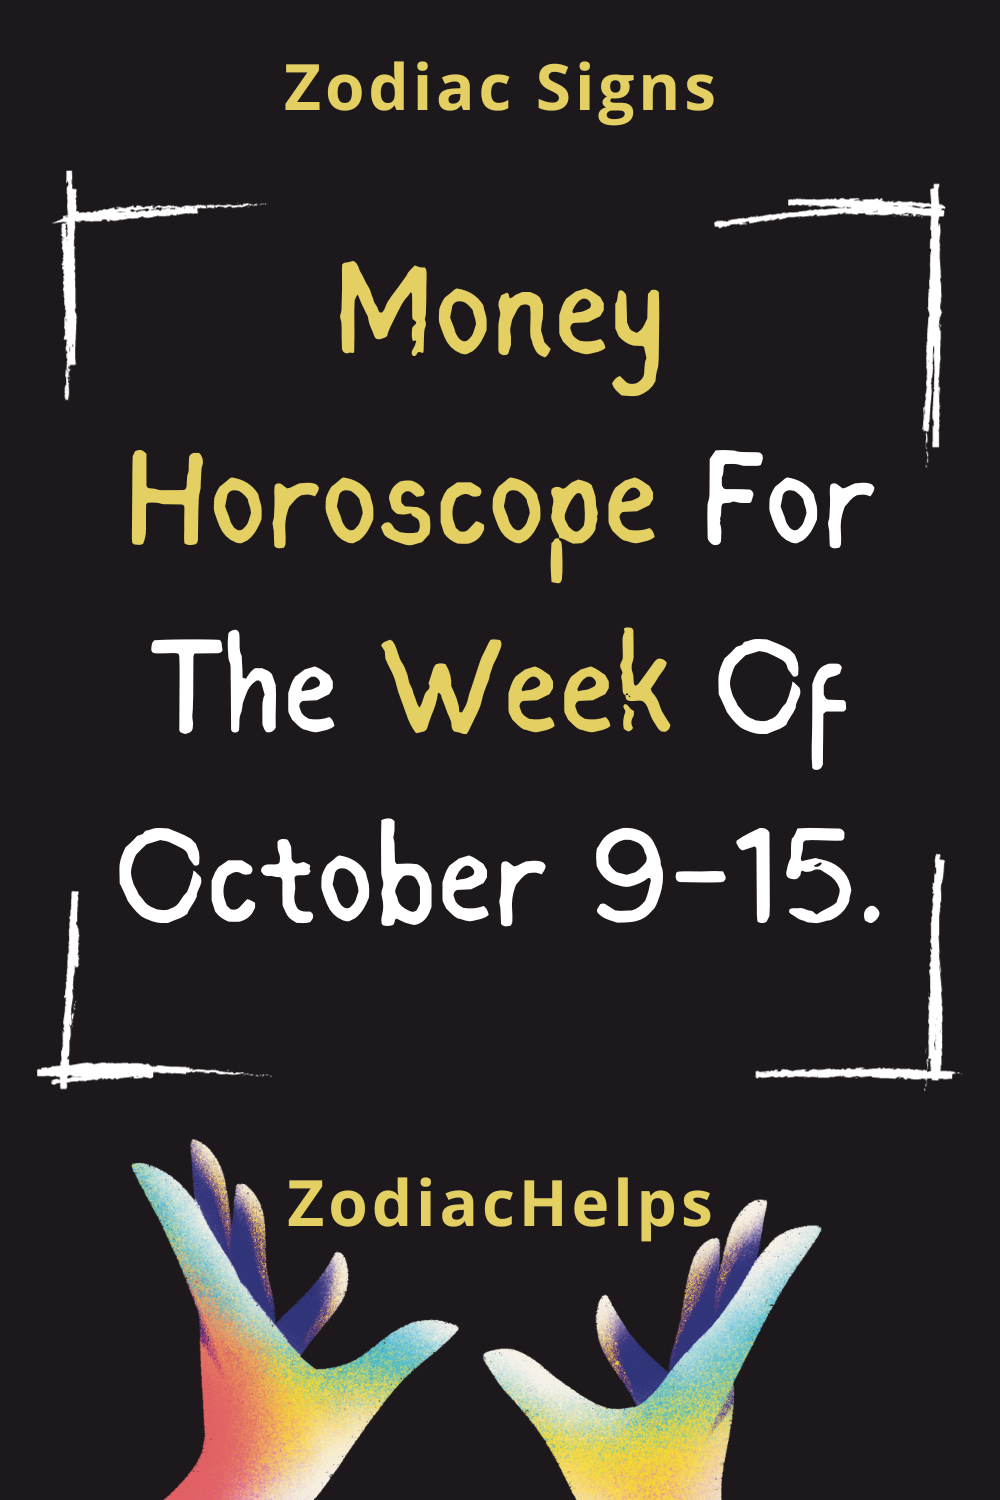 Money Horoscope For The Week Of October 9-15.